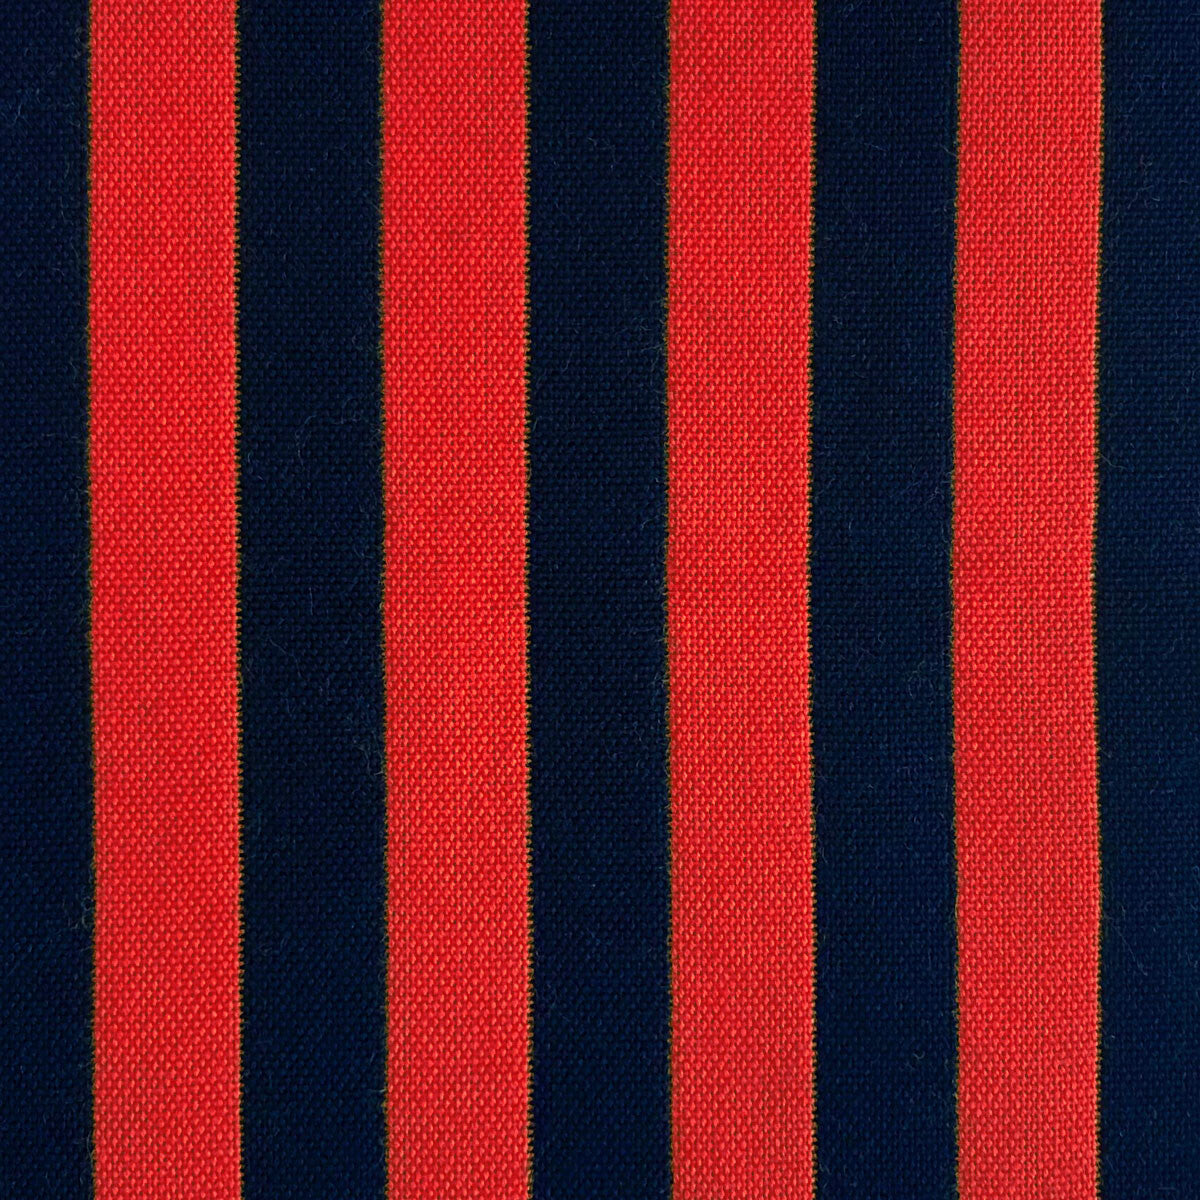 Benjamin fabric in rojo/navy color - pattern LCT1057.003.0 - by Gaston y Daniela in the Lorenzo Castillo VI collection